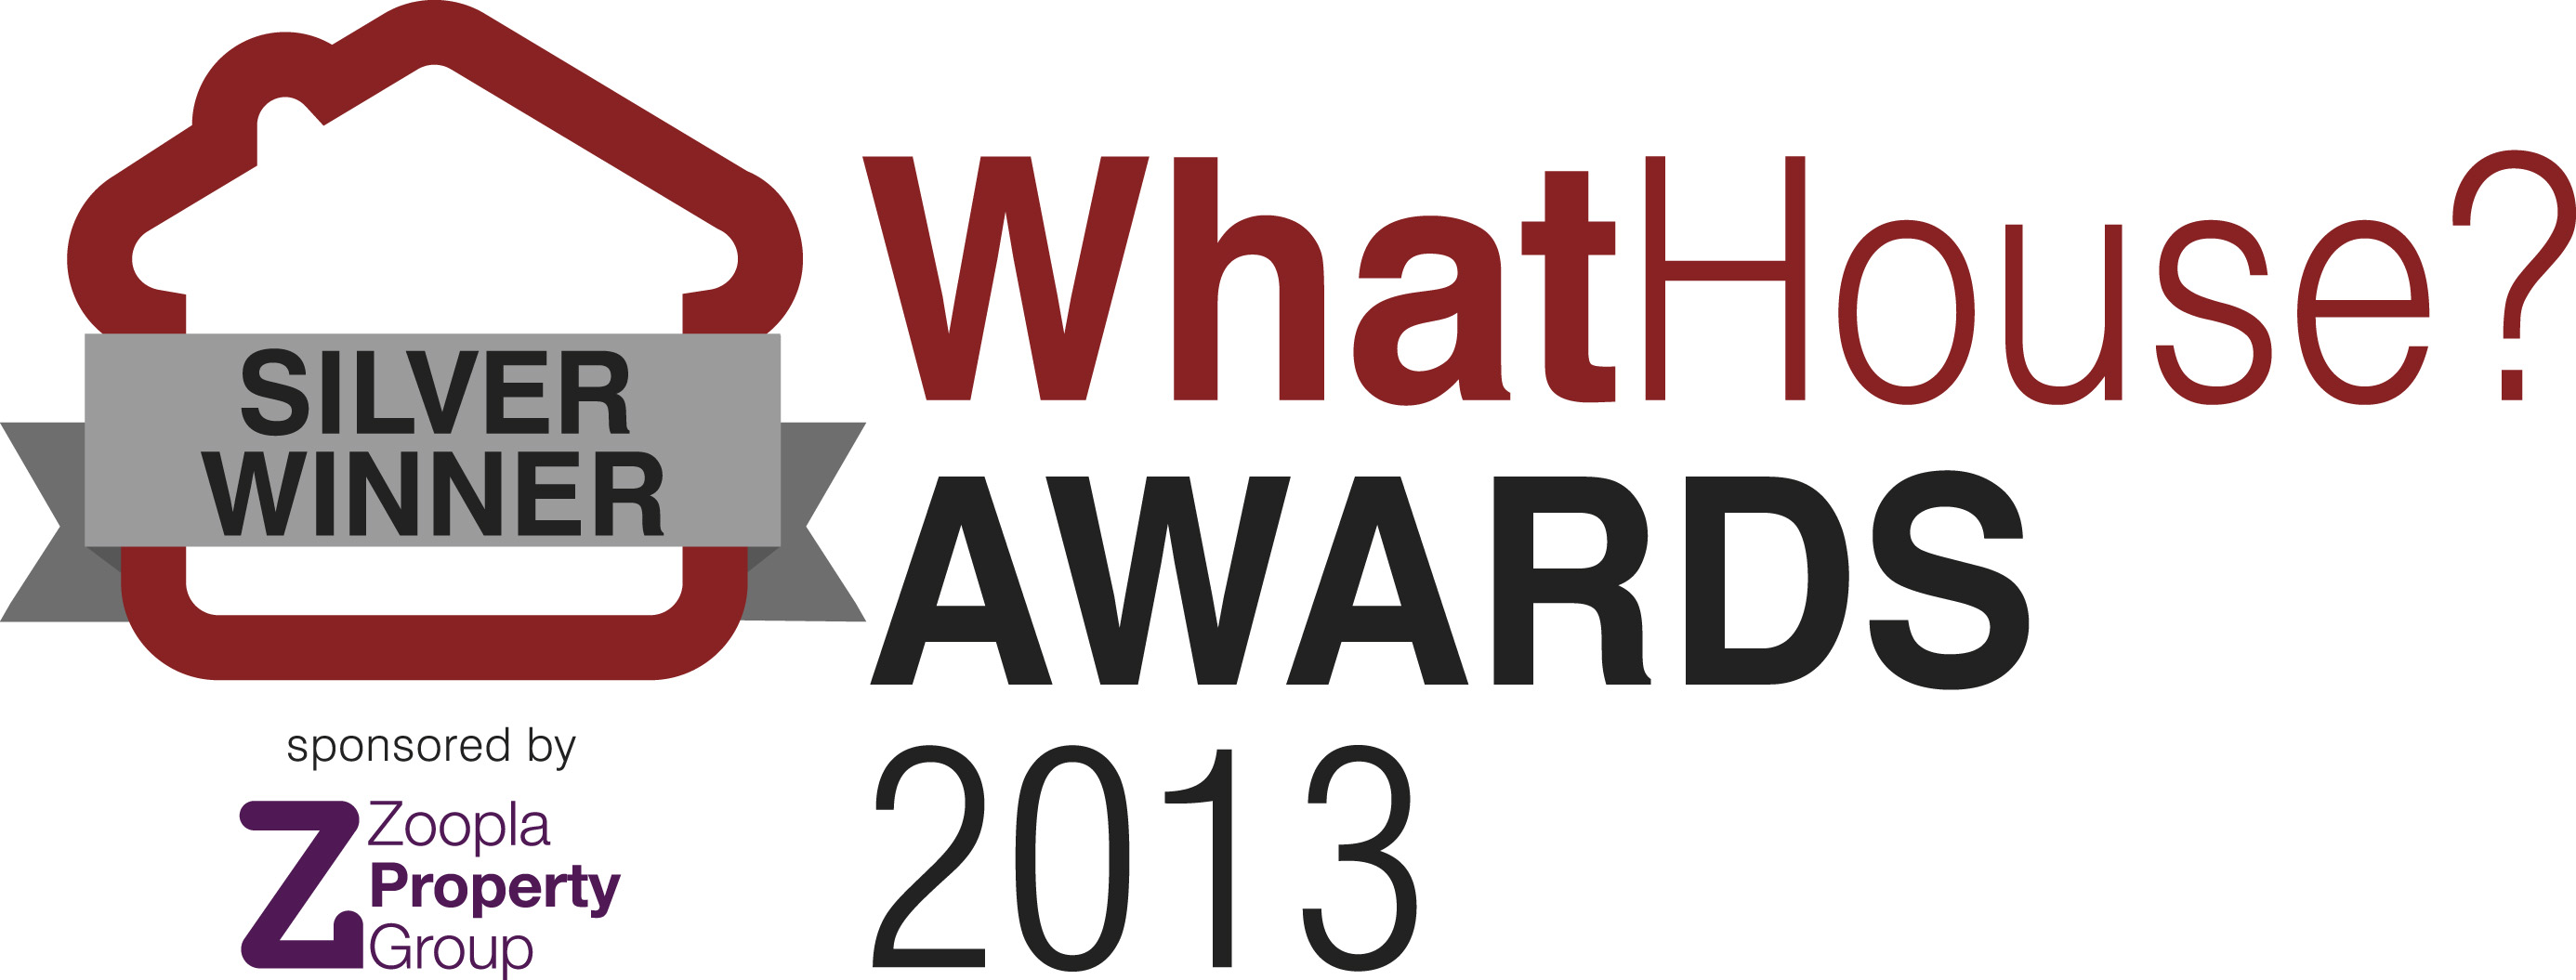 WhatHouse? Awards Winner Silver 2013